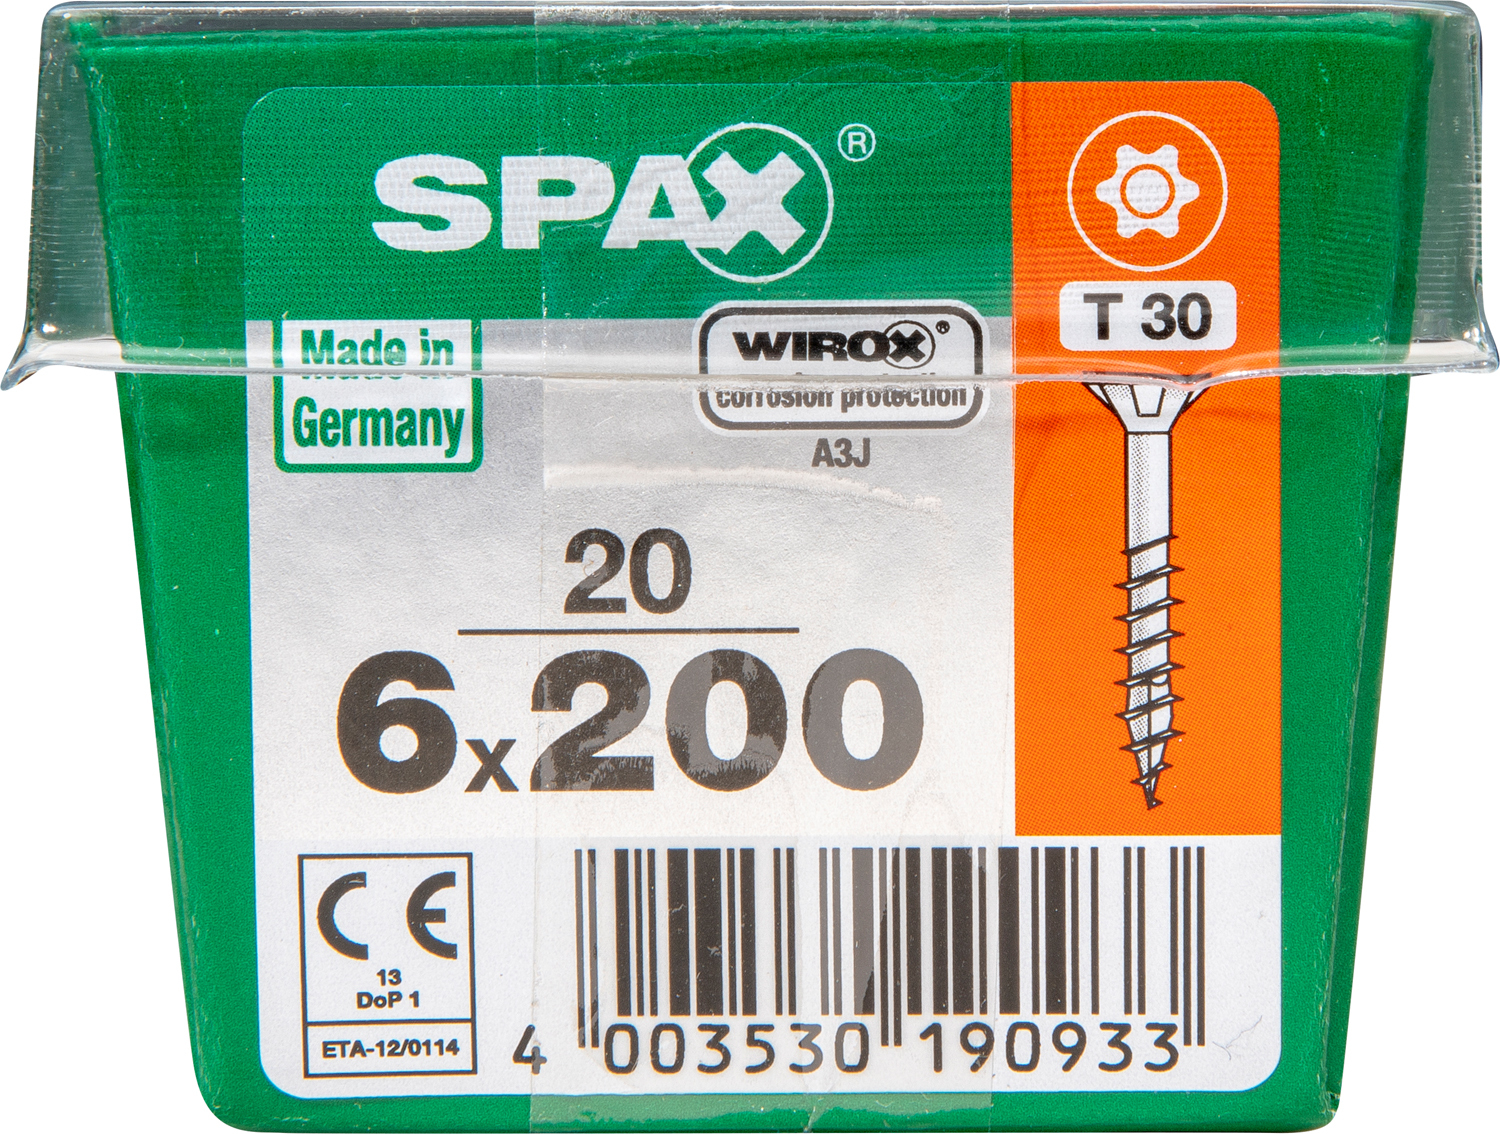 SPAX INTERNATIONAL GMBH & CO. KG - ENNEP Universalschrauben WIROX A9J TG 6x200 mm SeKo T-Star Plus Pack L STK (20 Stück)